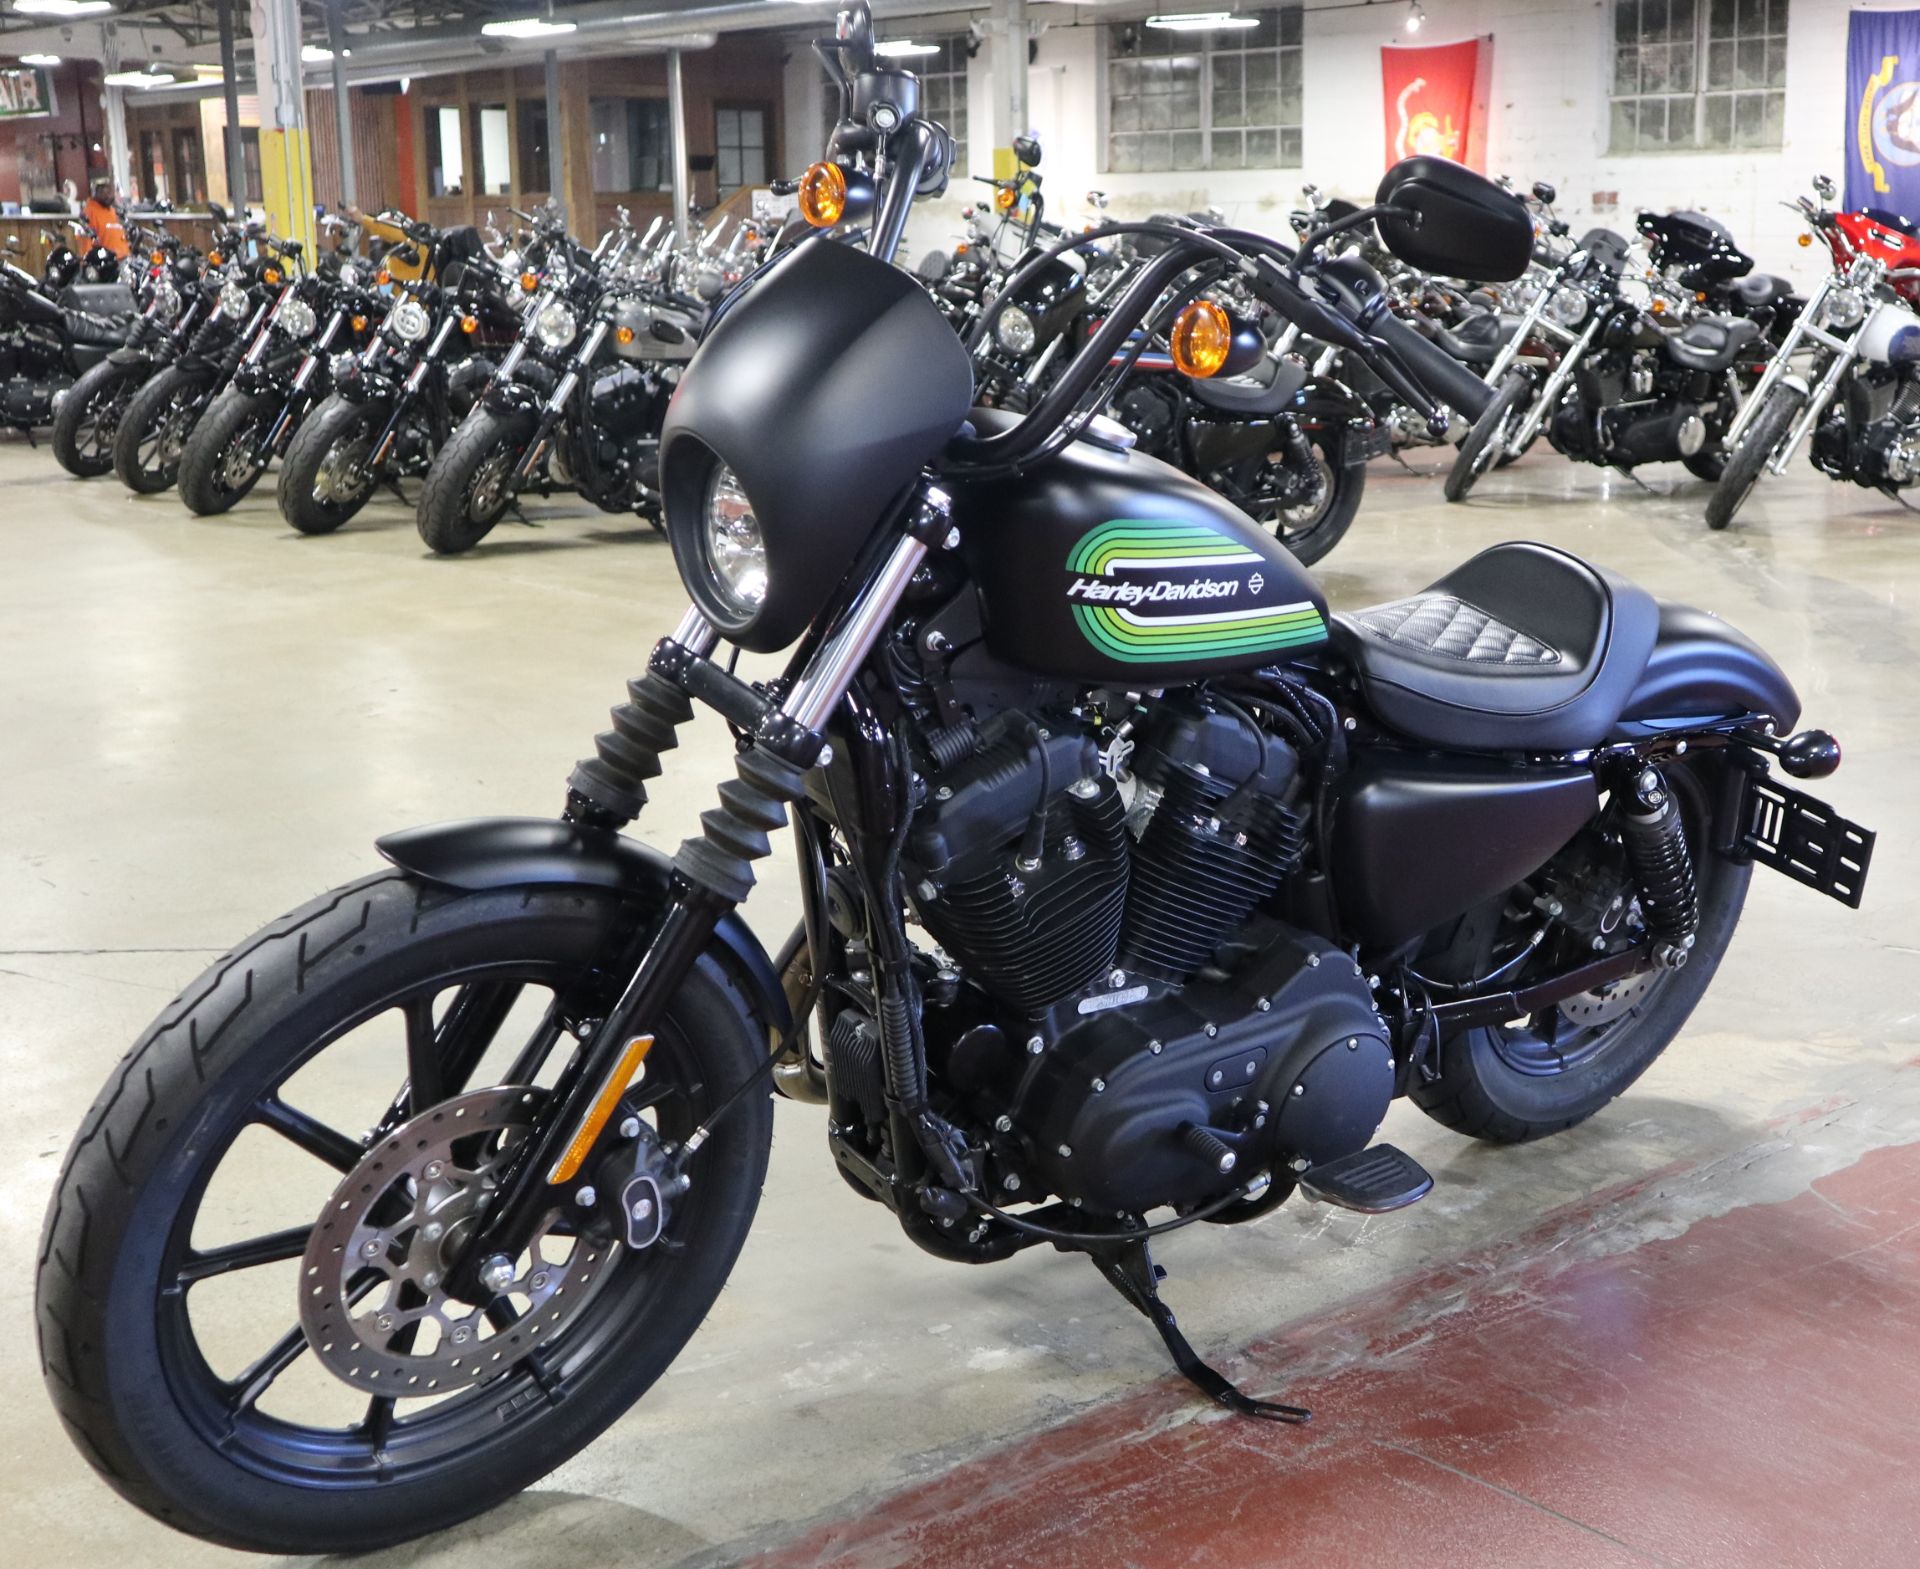 2021 Harley-Davidson Iron 1200™ in New London, Connecticut - Photo 4